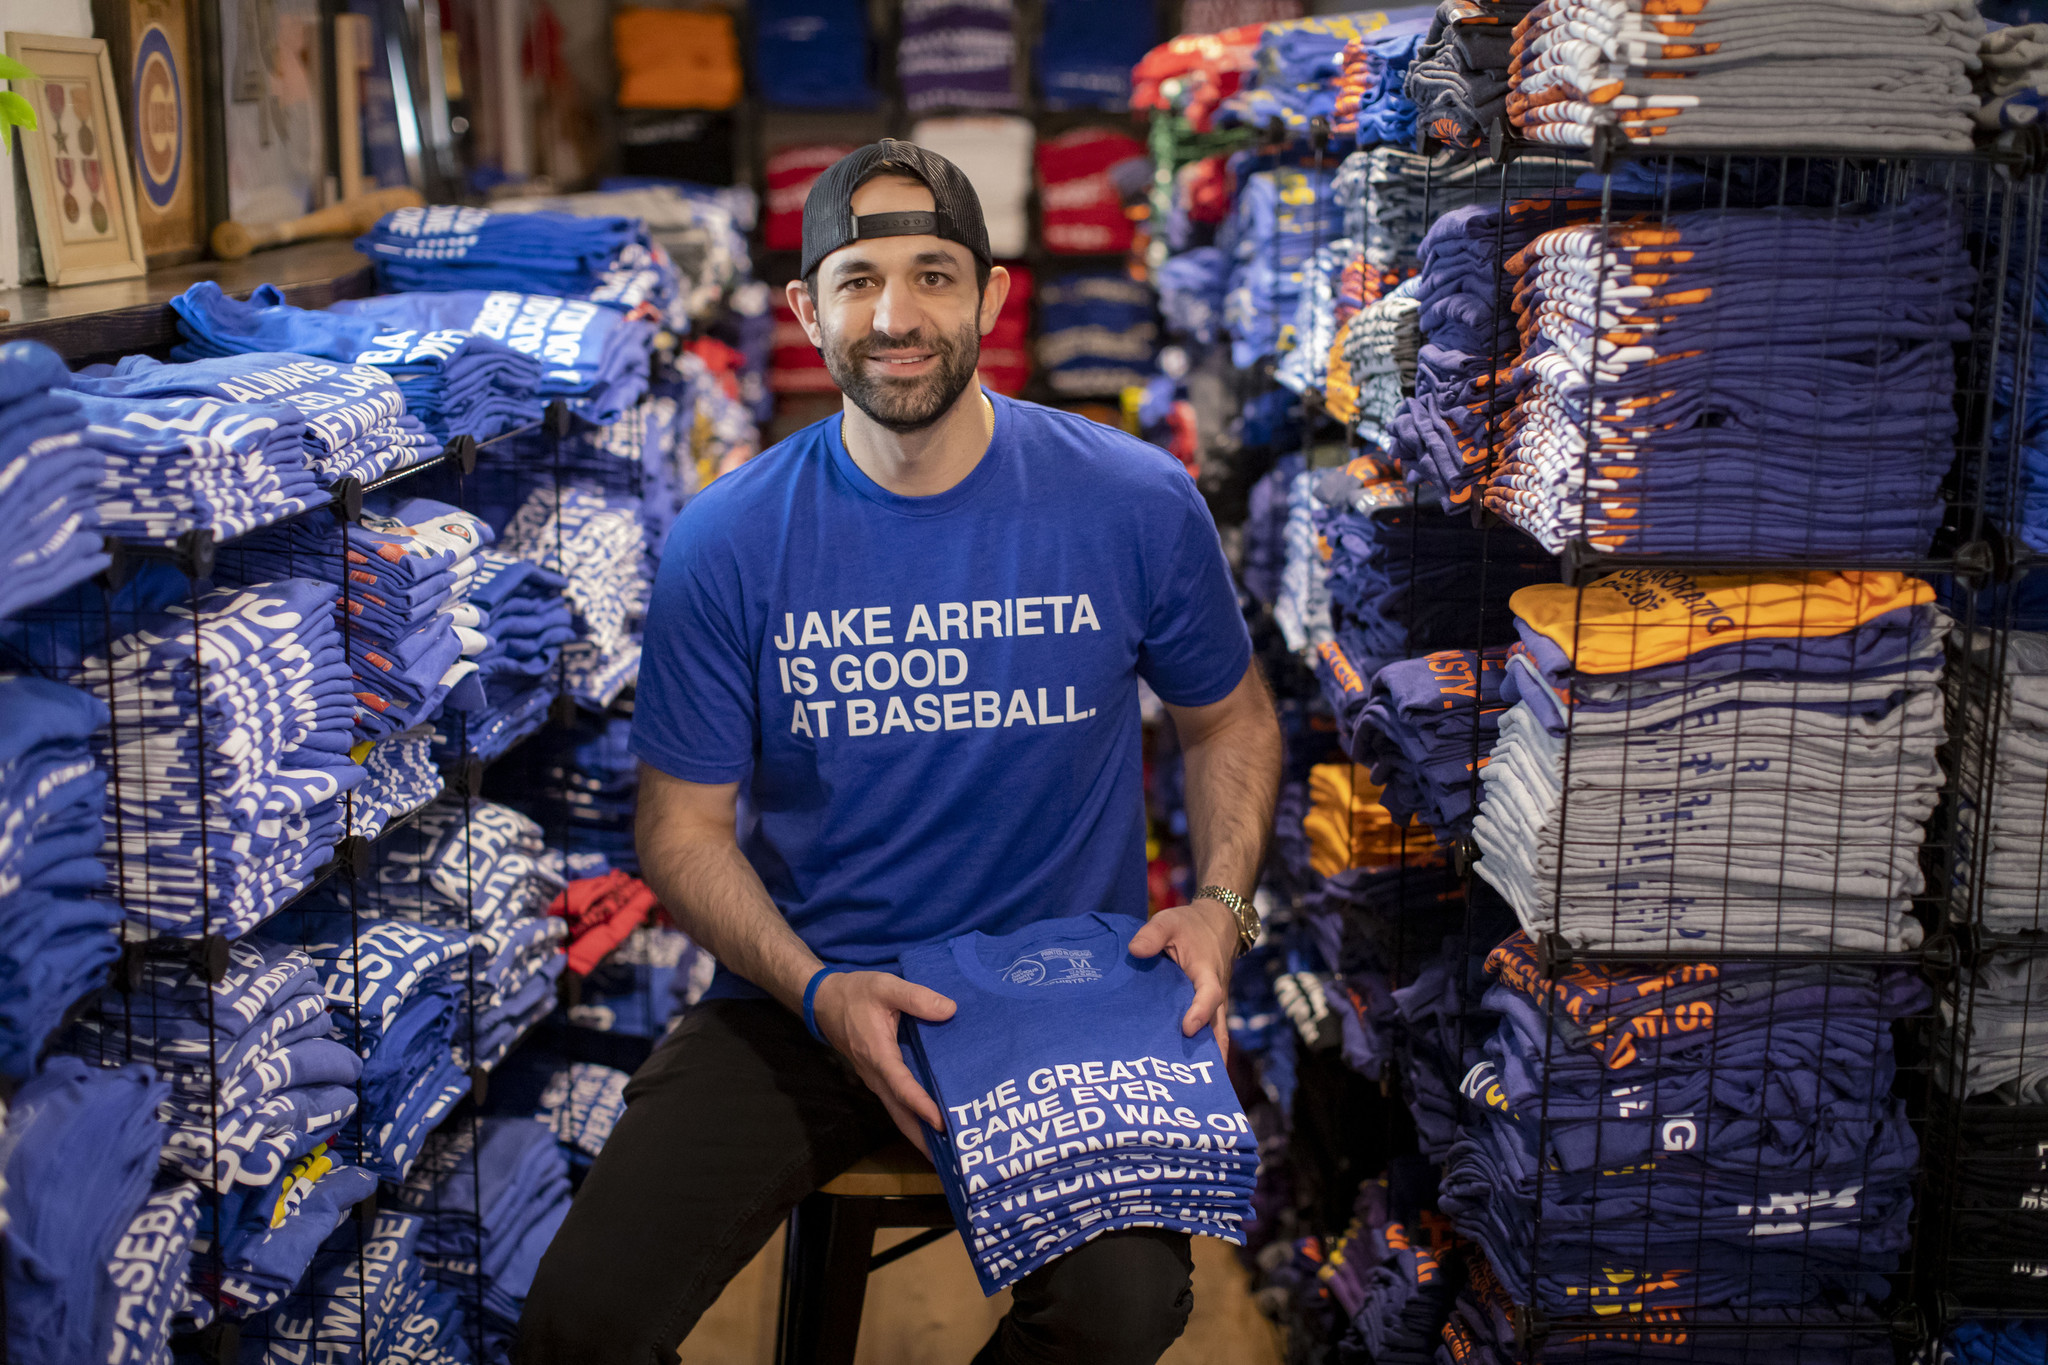 Baltimore Orioles Chaos Comin' Shirt, Custom prints store